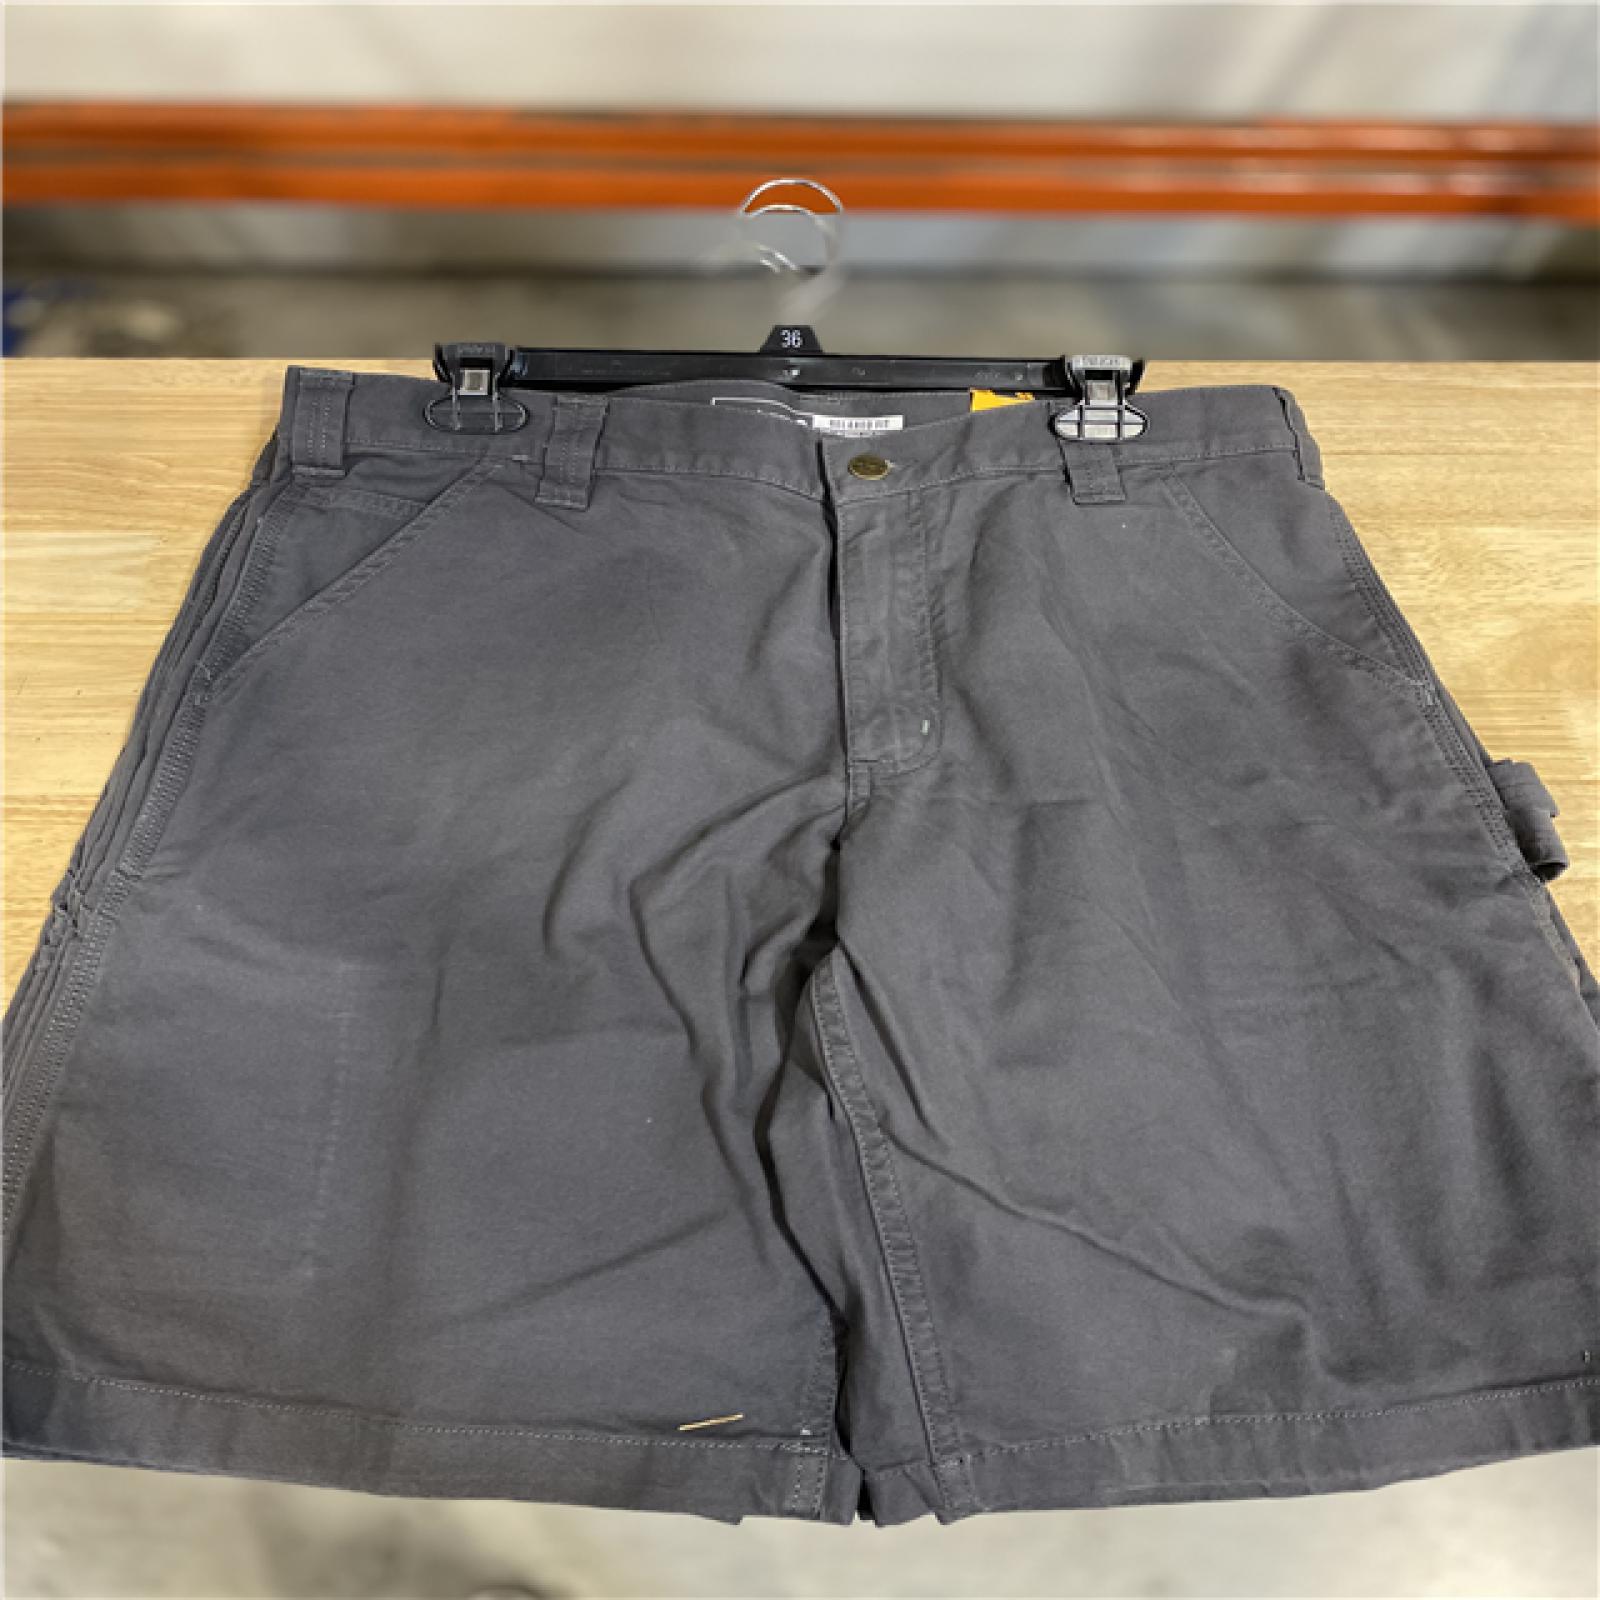 NEW! - Carhartt Men's 36 Shadow Cotton/Spandex Rugged Flex Rigby Work Short - (4 UNITS)